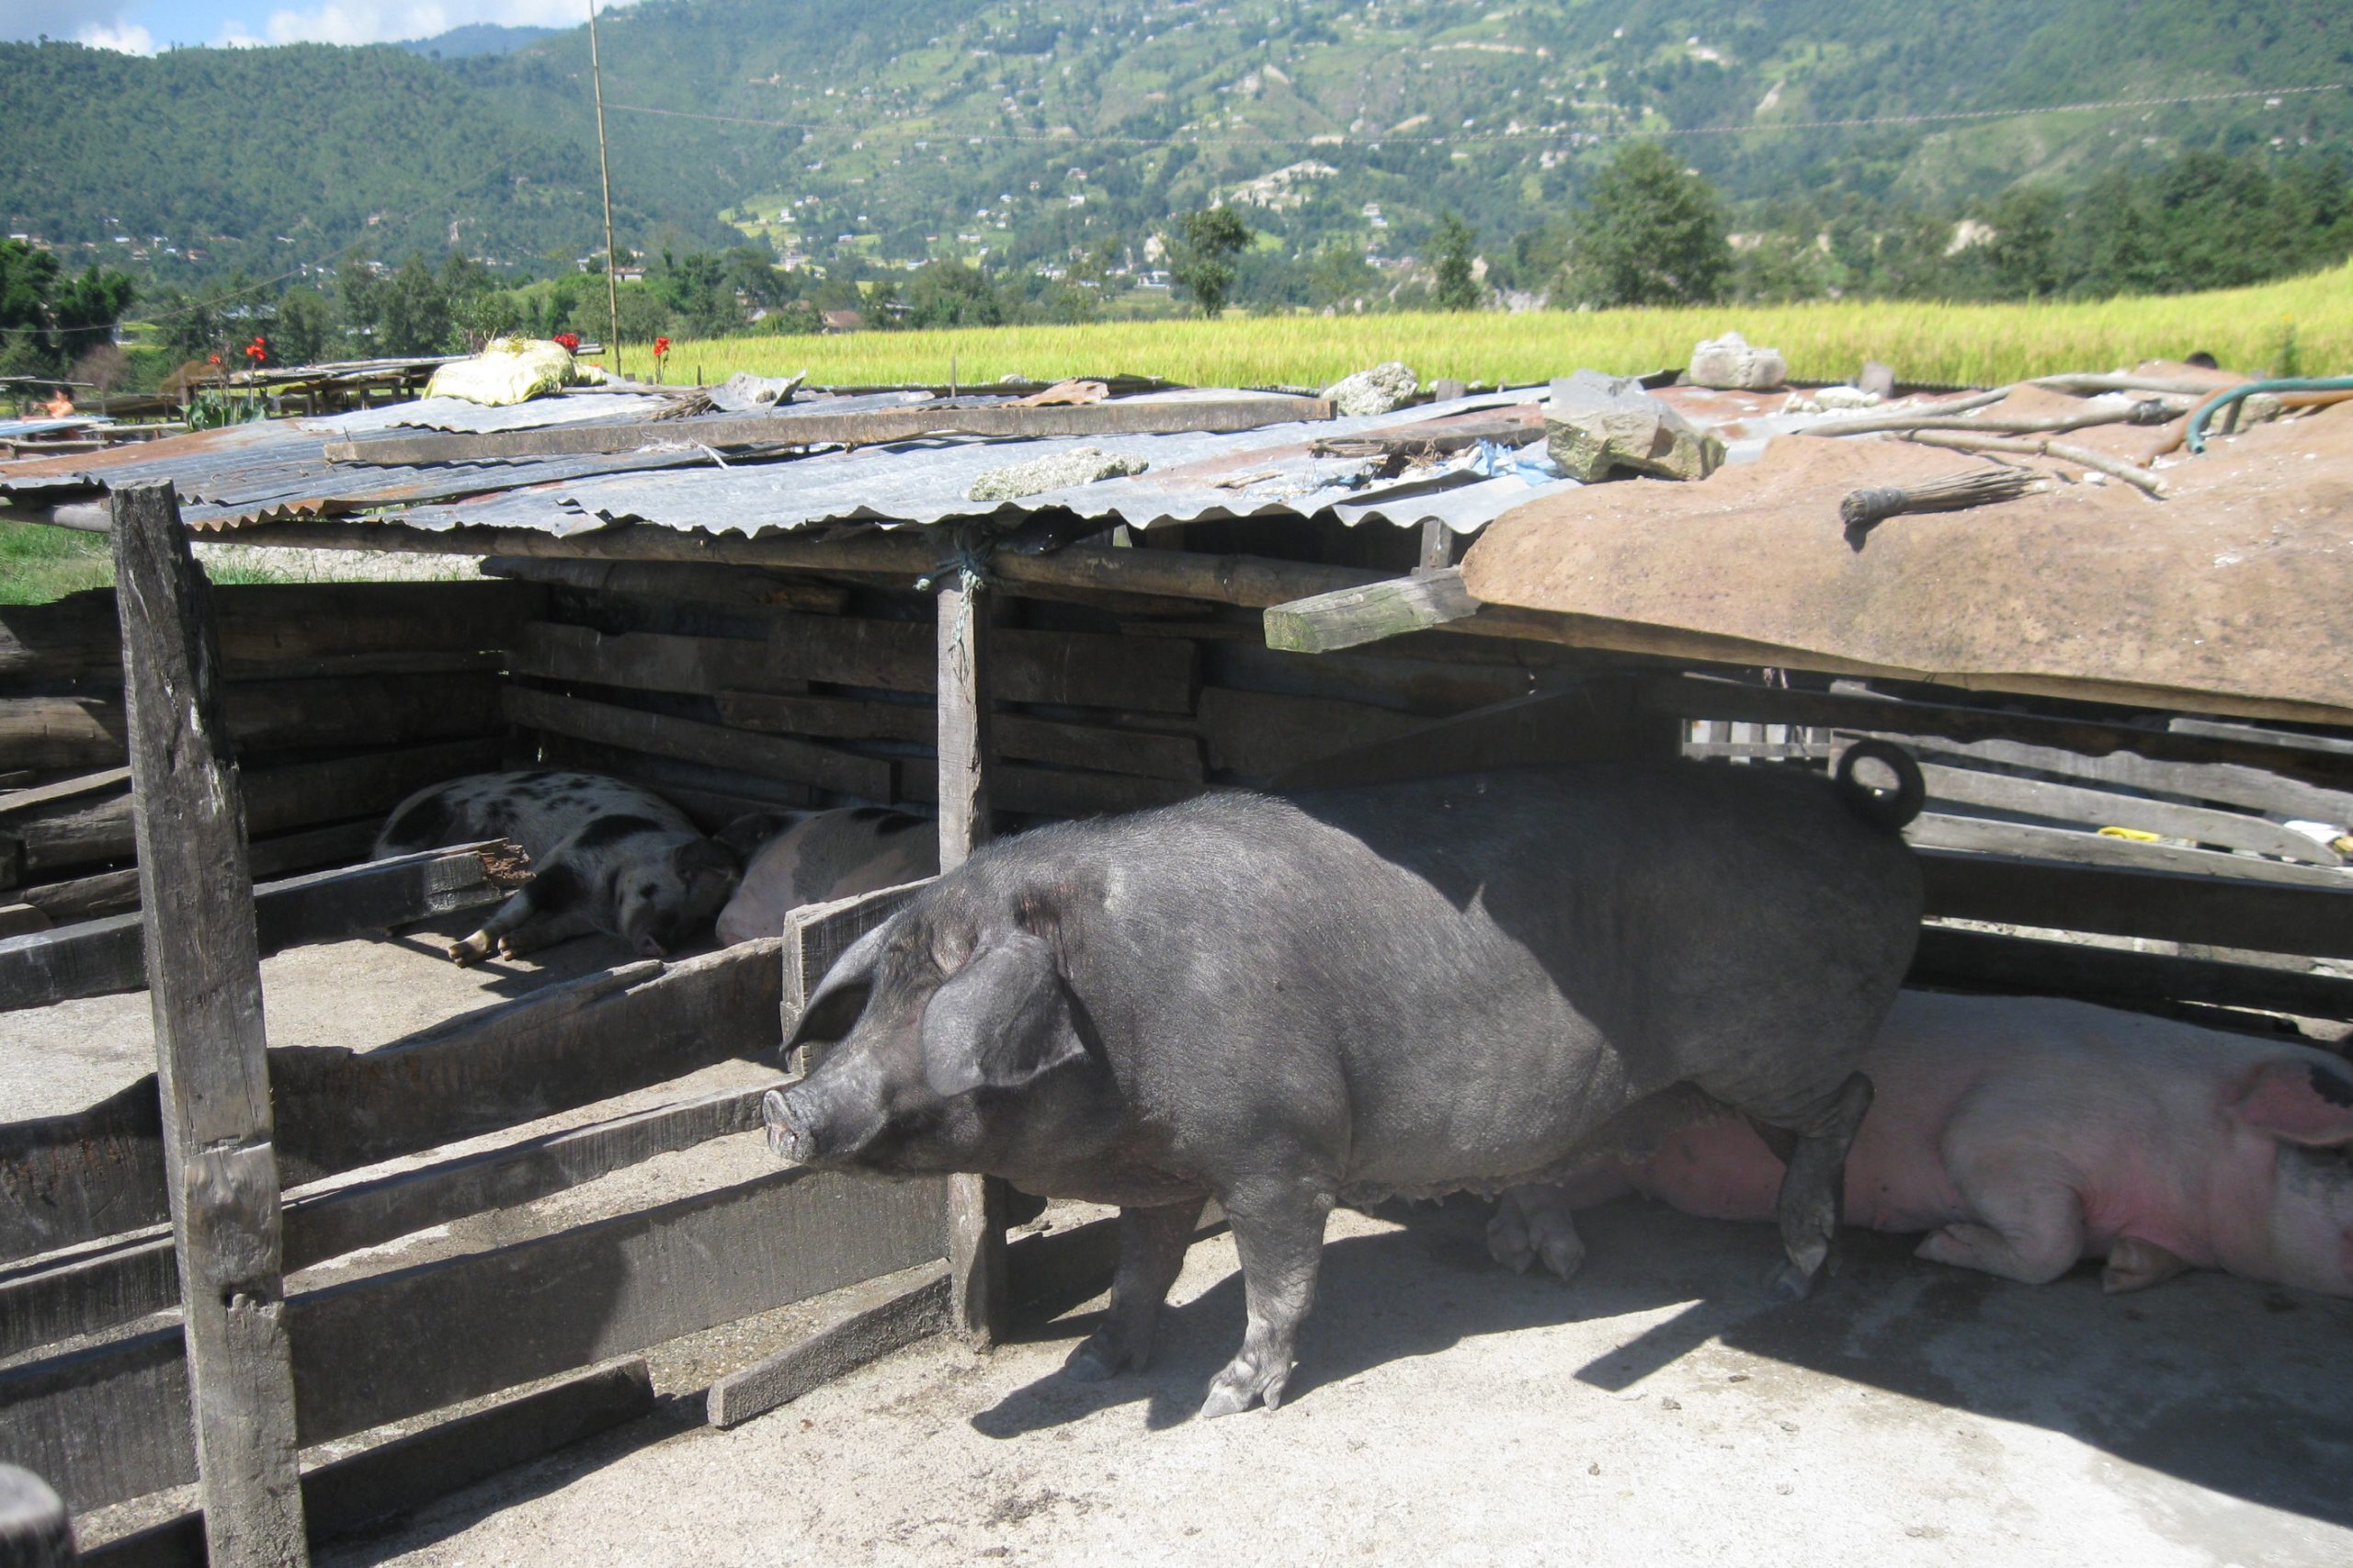 Pig farming in Nepal is growing step by step - Pig Progress